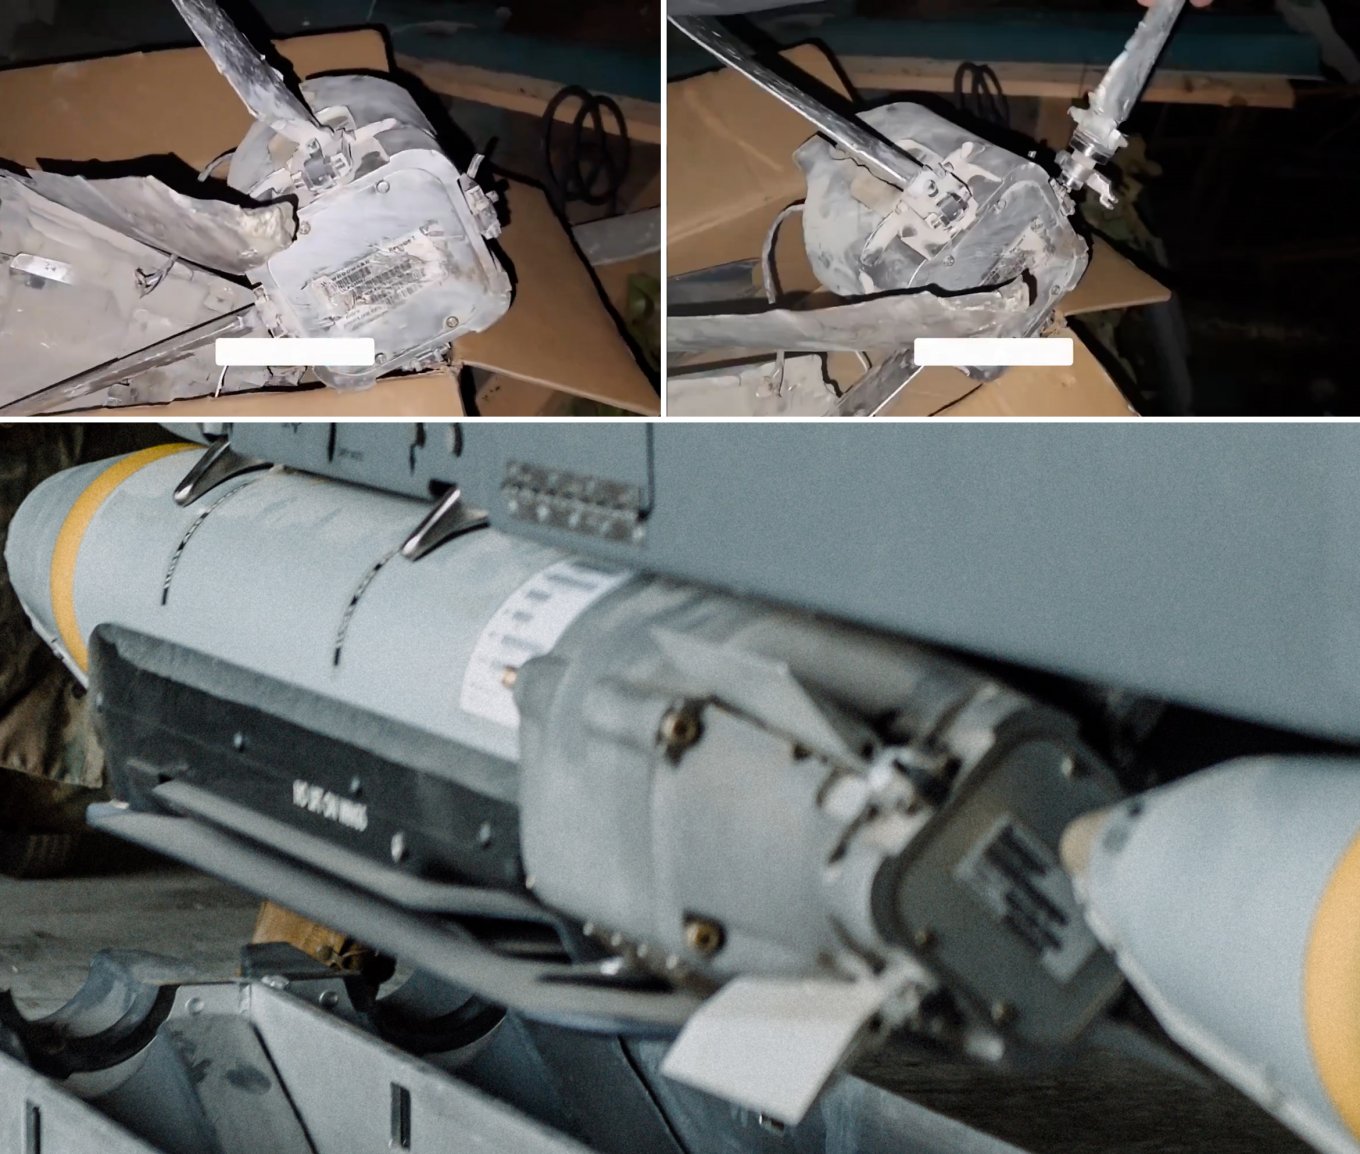 The GLSDB precision-guided bomb, Defense Express